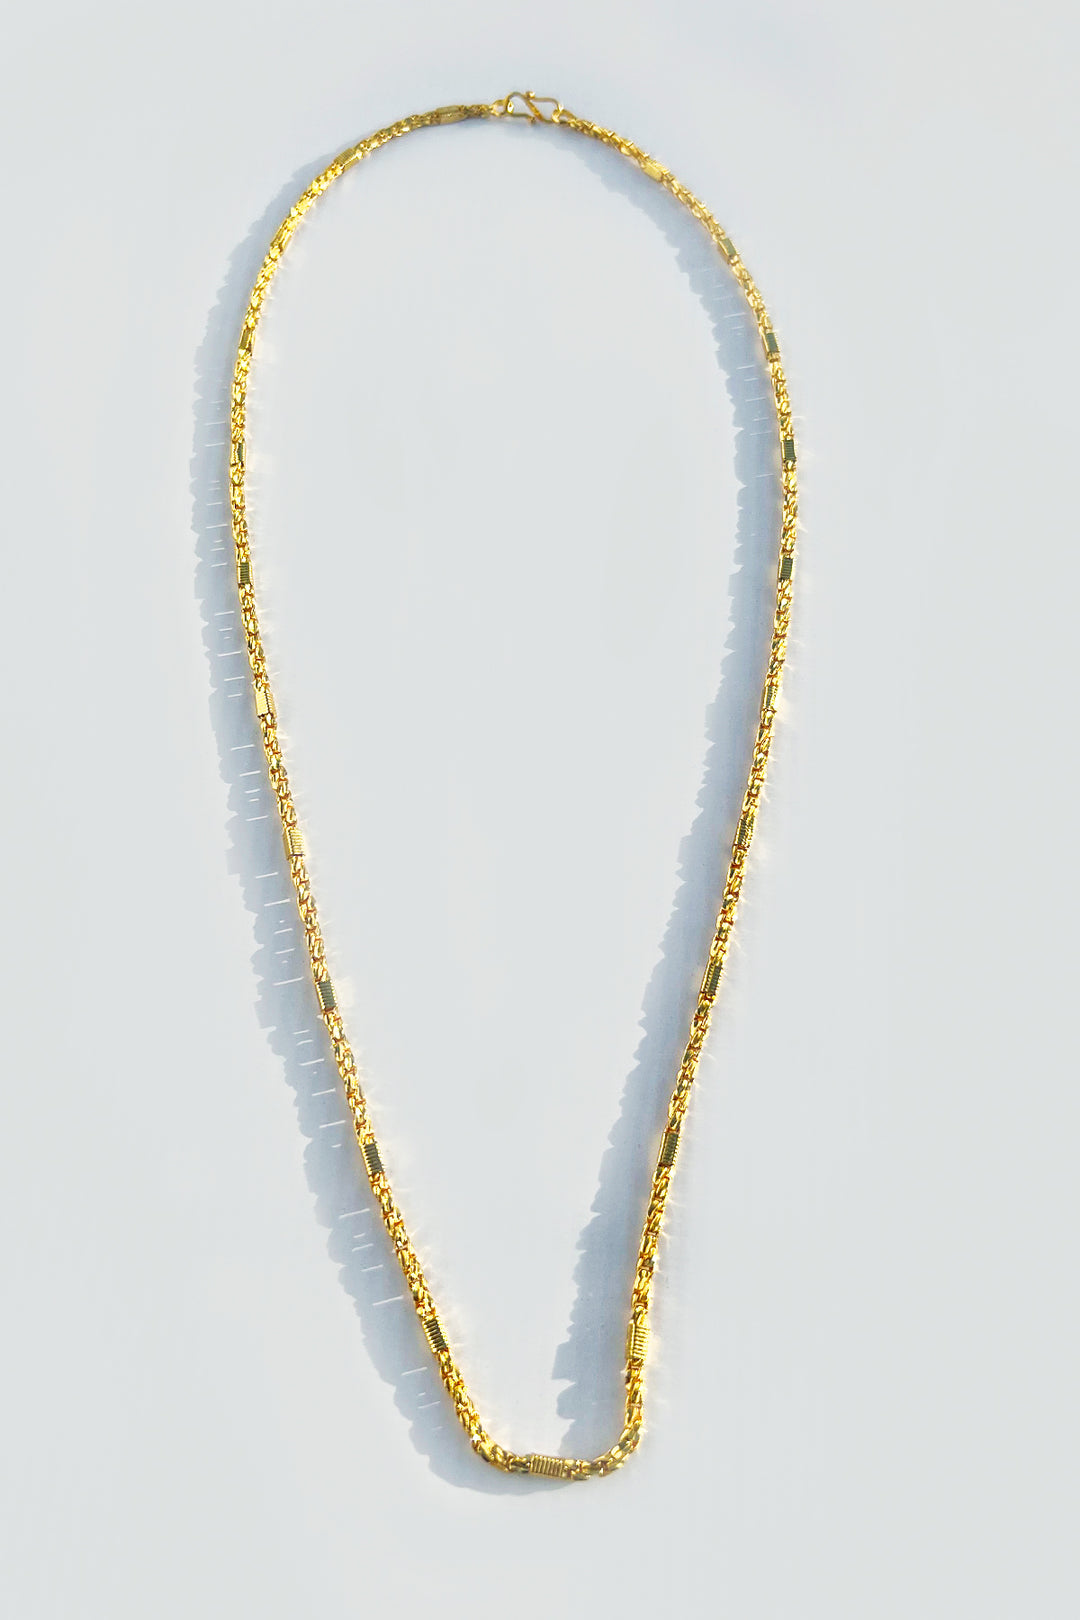 Minimalist Golden Grace Chain - S23 - WJW0029